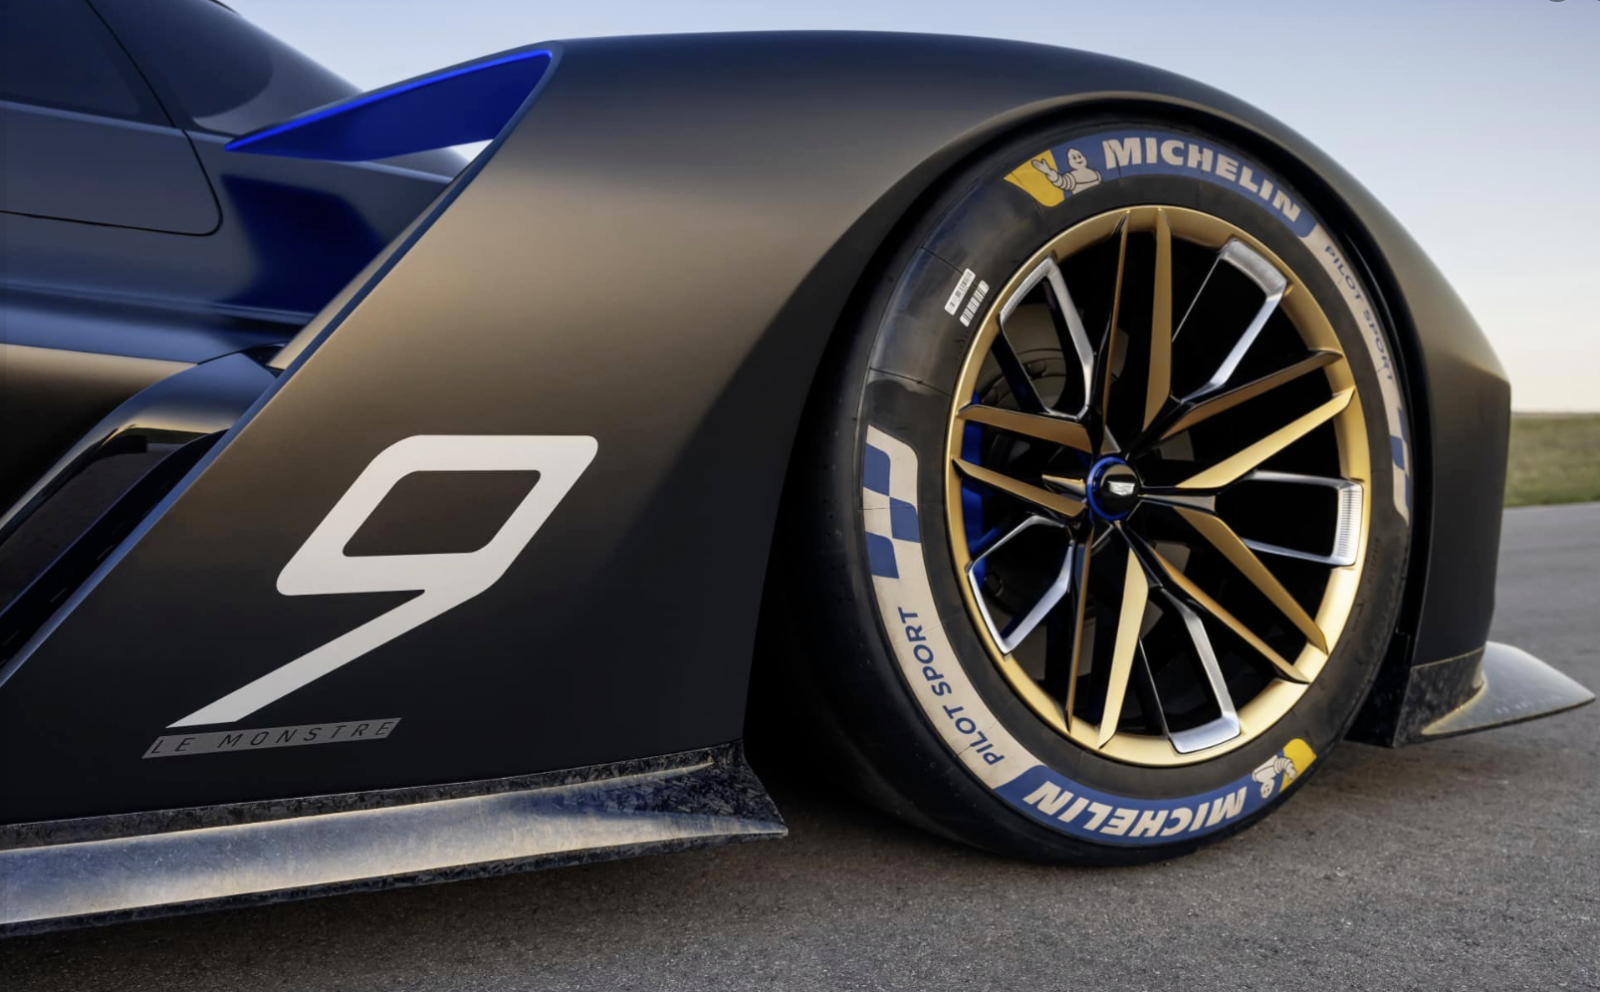 Cadillac's new IMSA GTP concept car